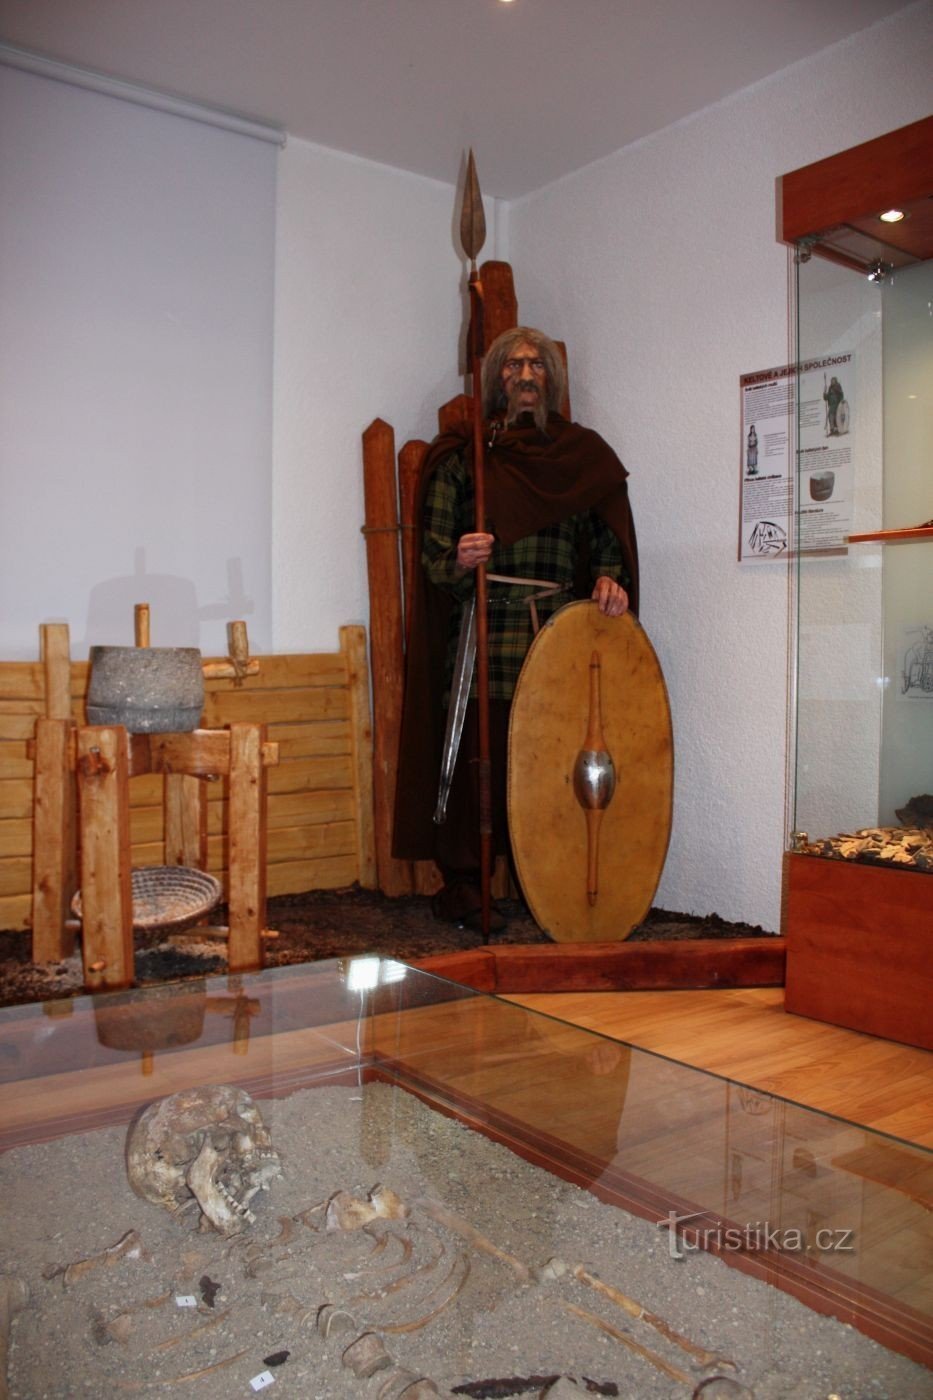 Museum of Celts in Dobšice